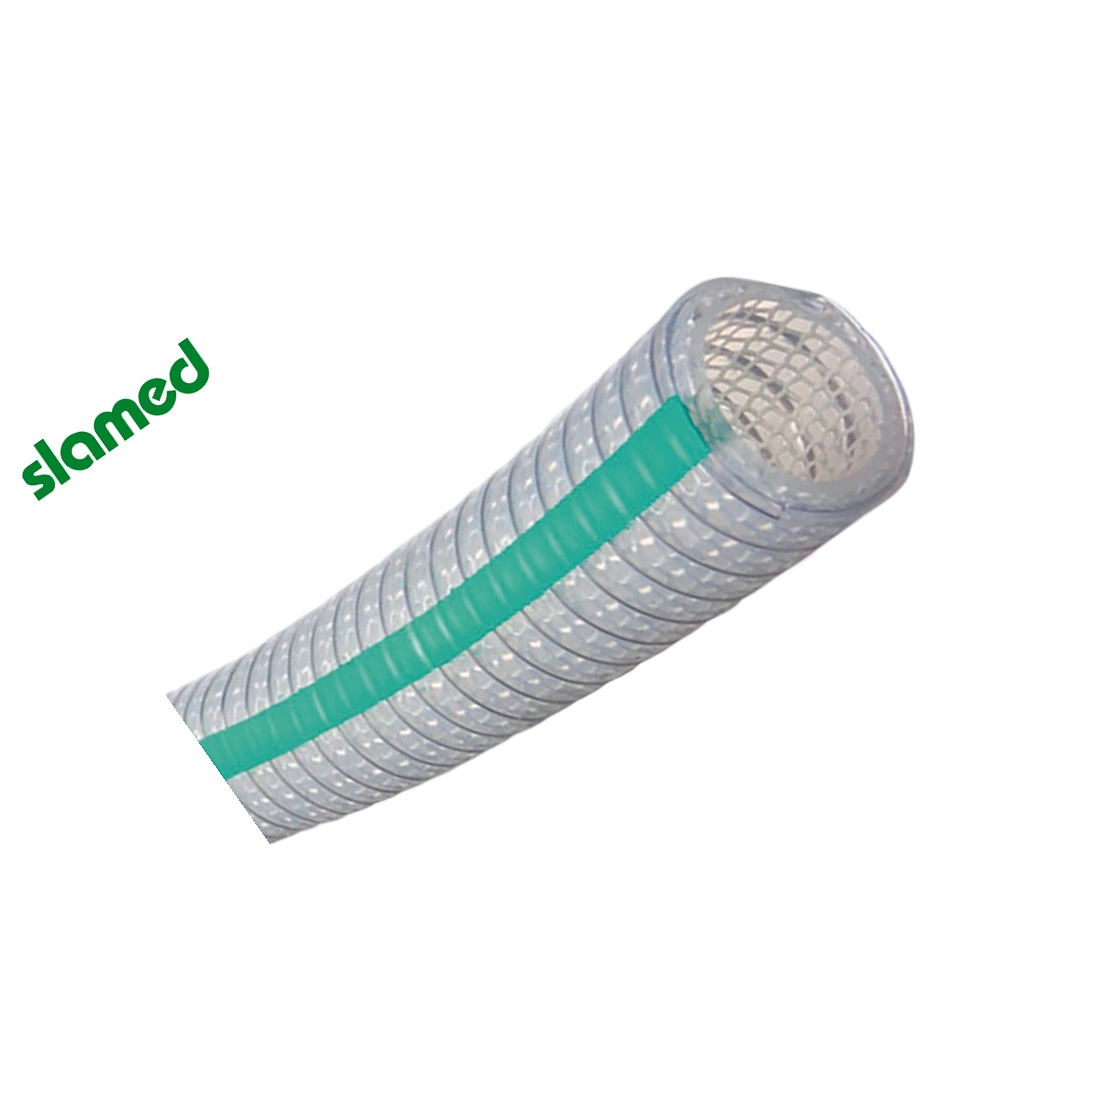 SLAMED 食品级硅橡胶软管 (1m单位) TSIS-19 SD7-105-271